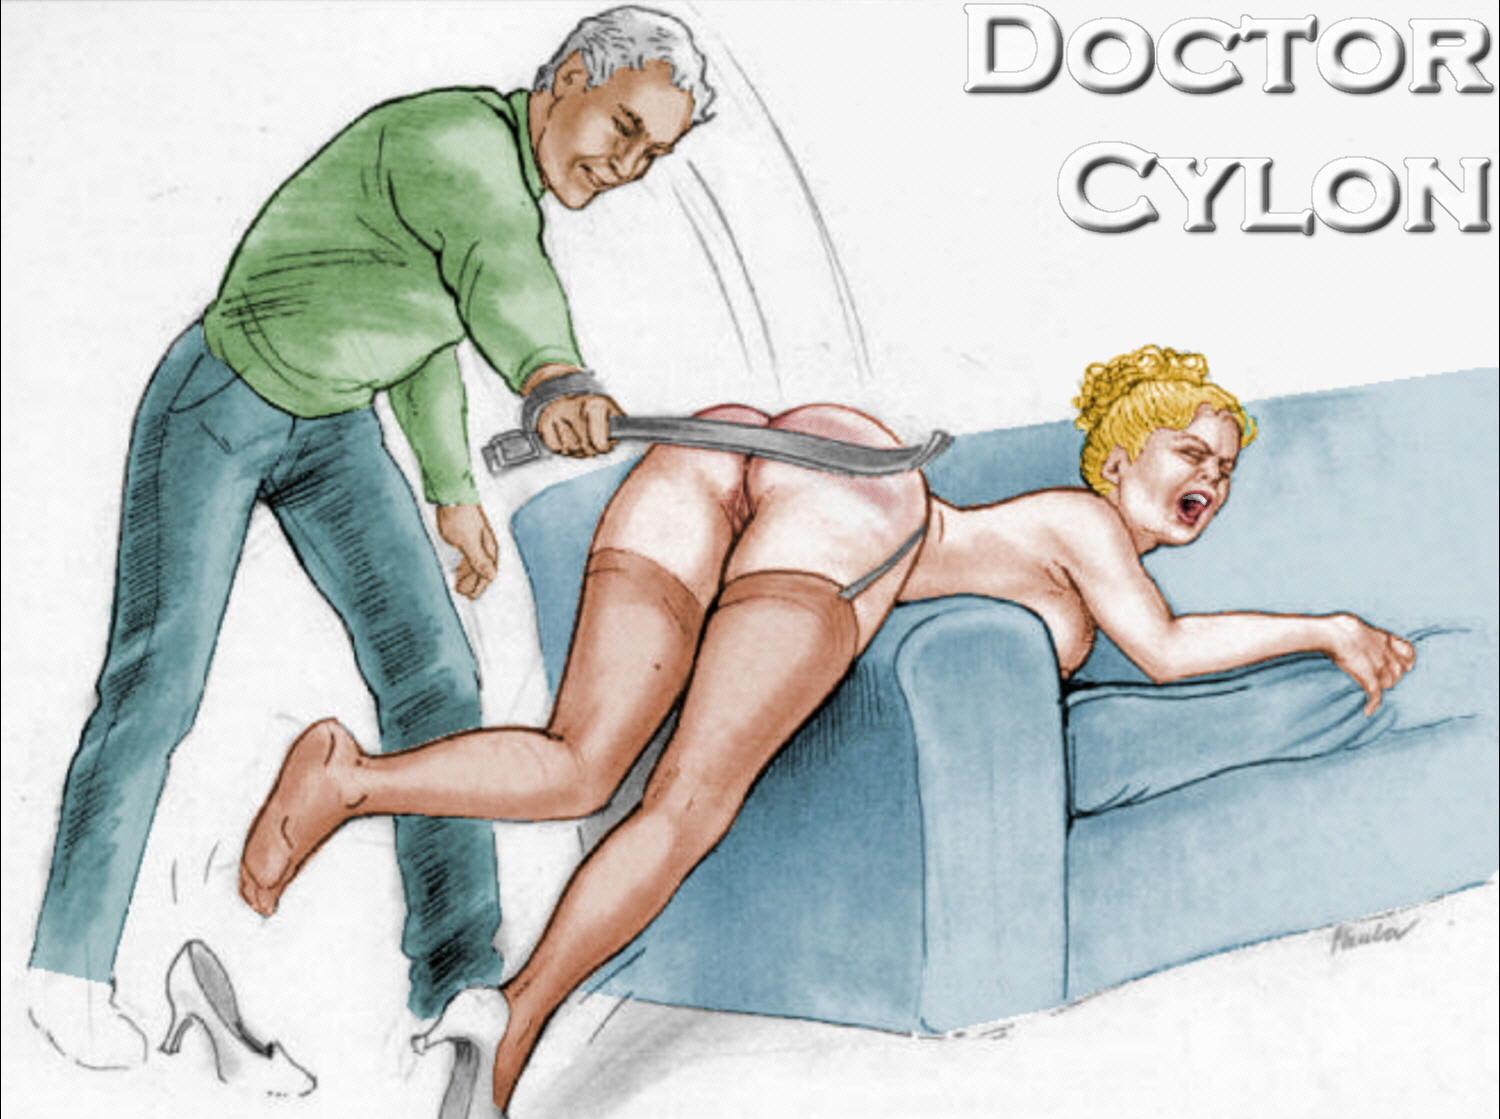 paula/doc cylon belt spanking